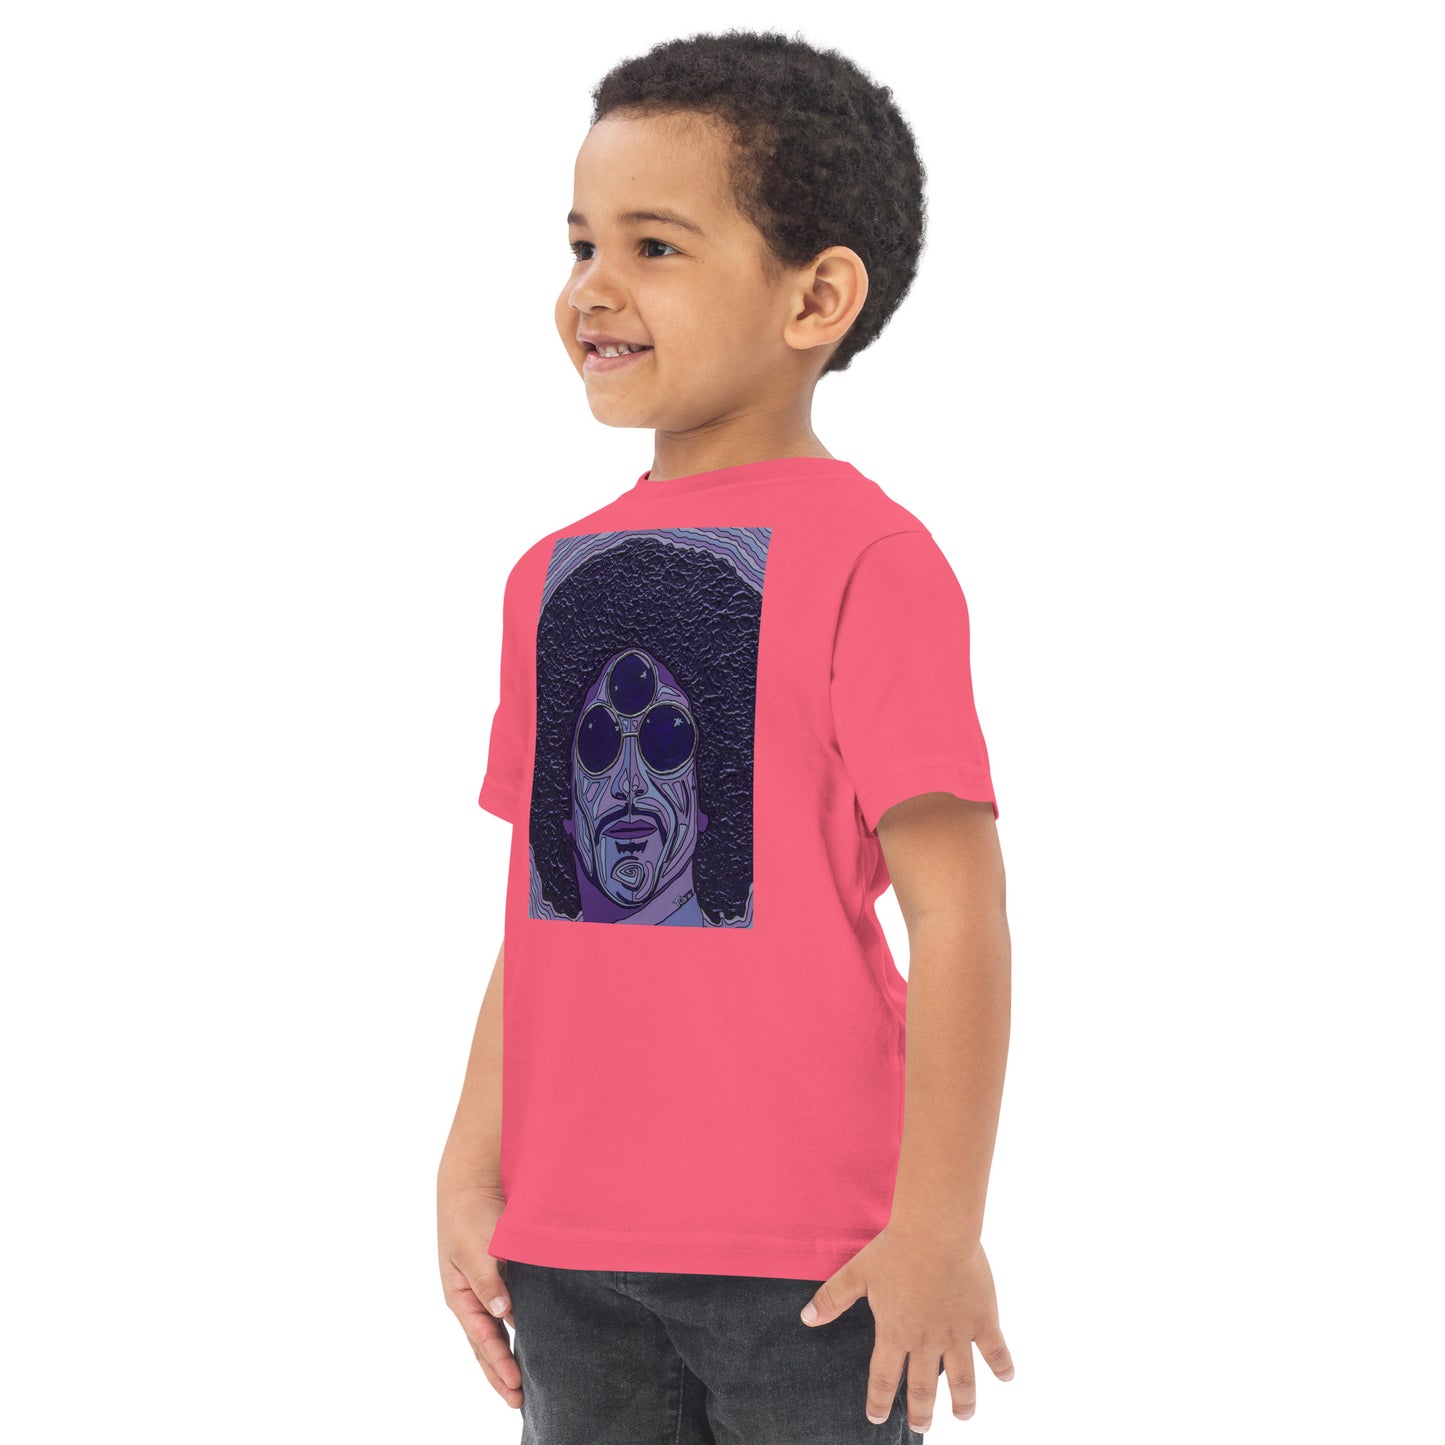 Prince of Funk - Toddler jersey t-shirt